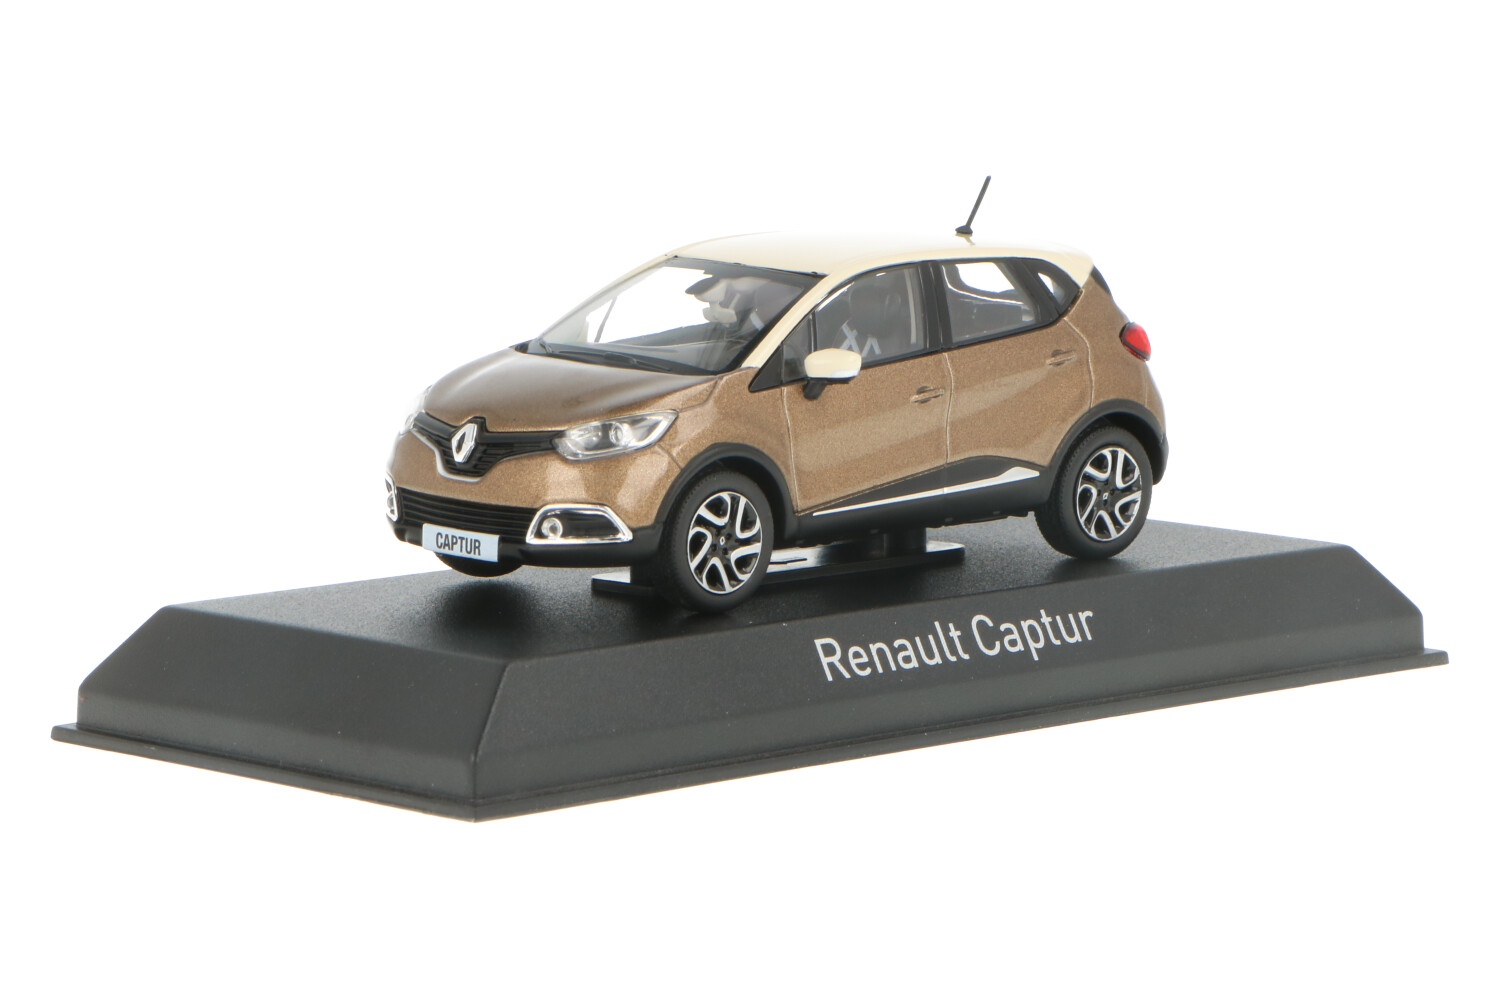 Renault-Captur-517774_13153551095177742Renault-Captur-517774_Houseofmodelcars_.jpg